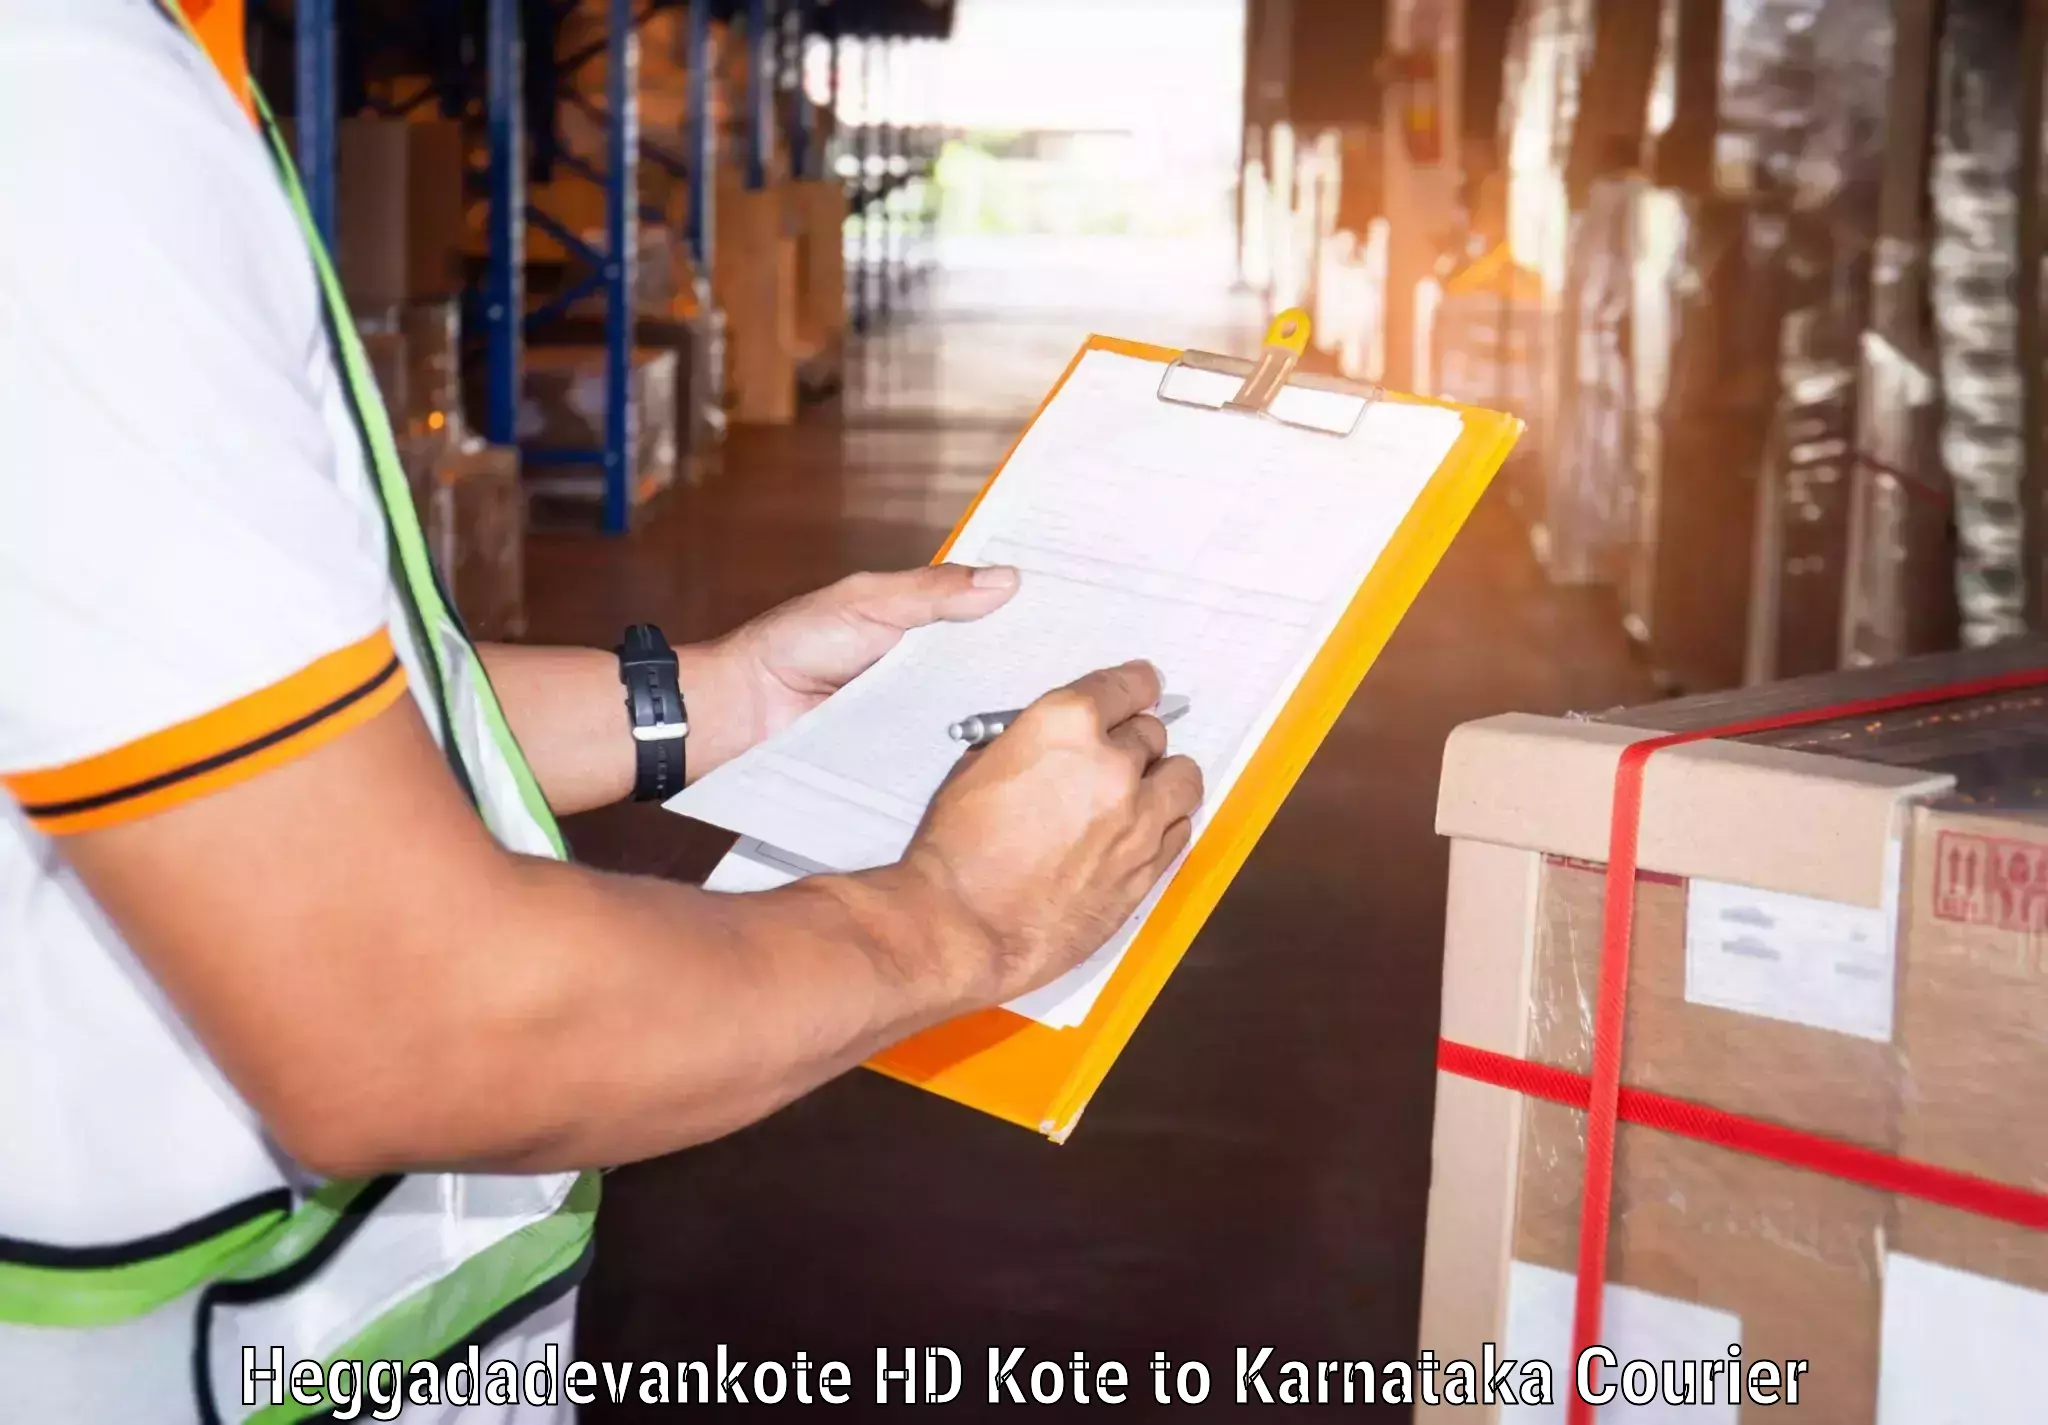 Global shipping solutions Heggadadevankote HD Kote to Sullia